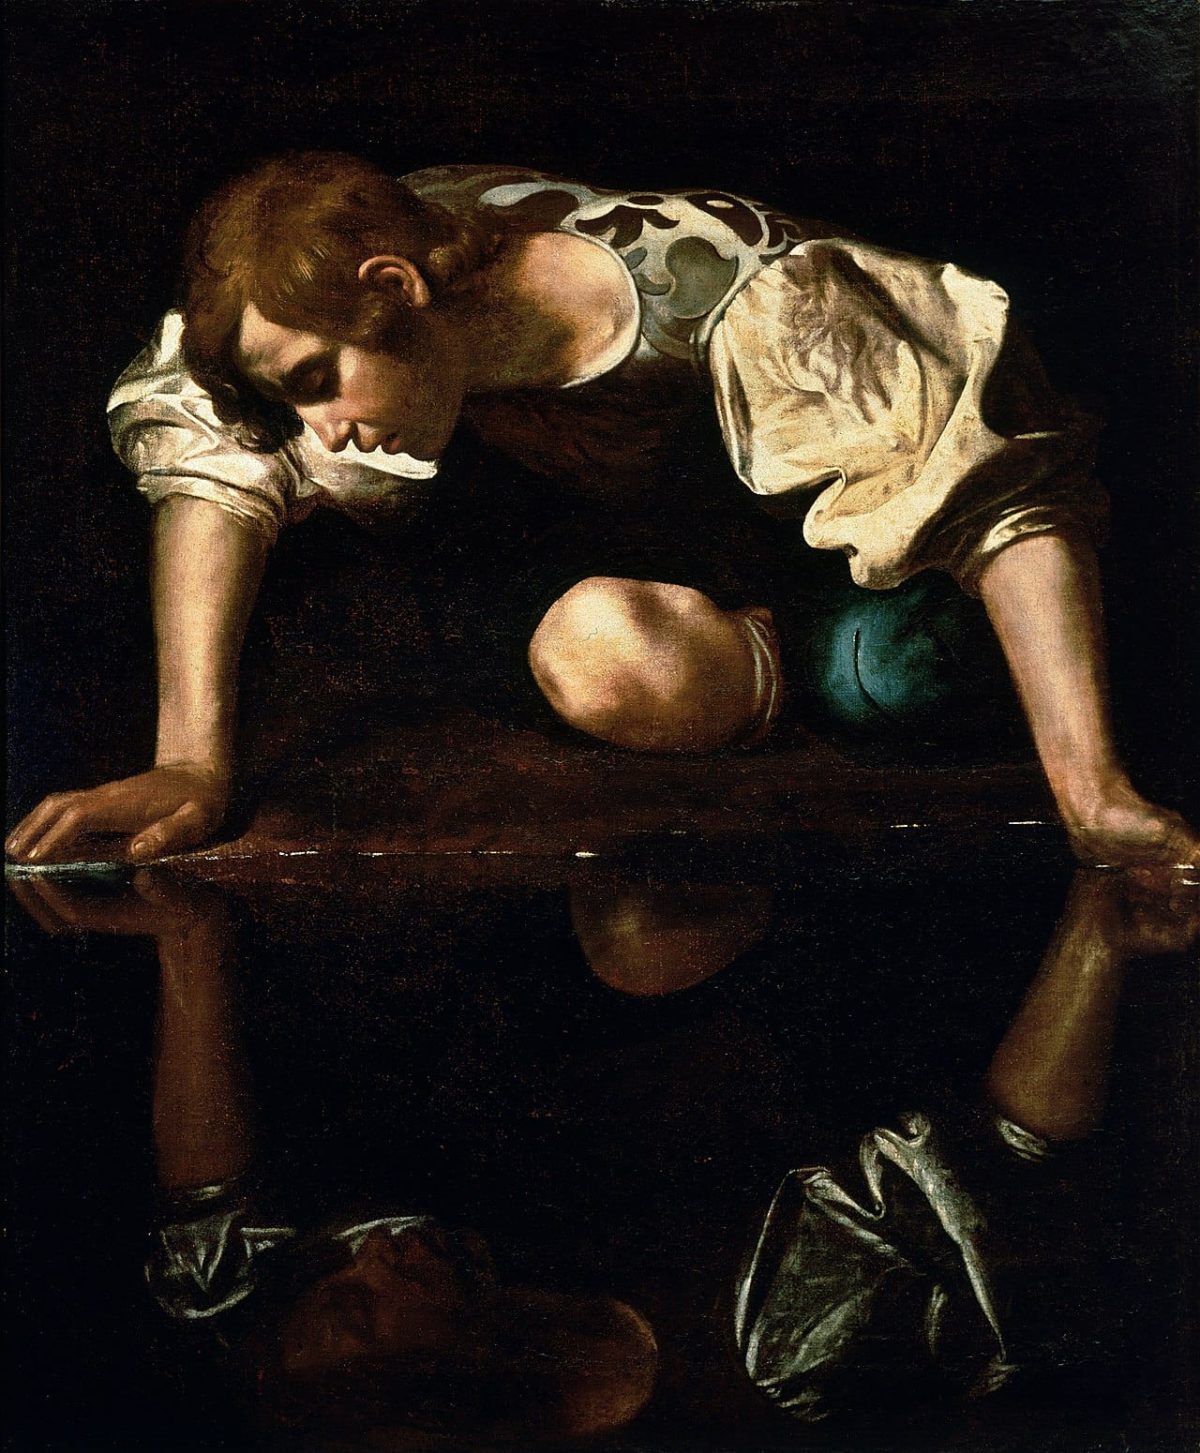 "Narcissus" by Caravaggio (1597-1599)